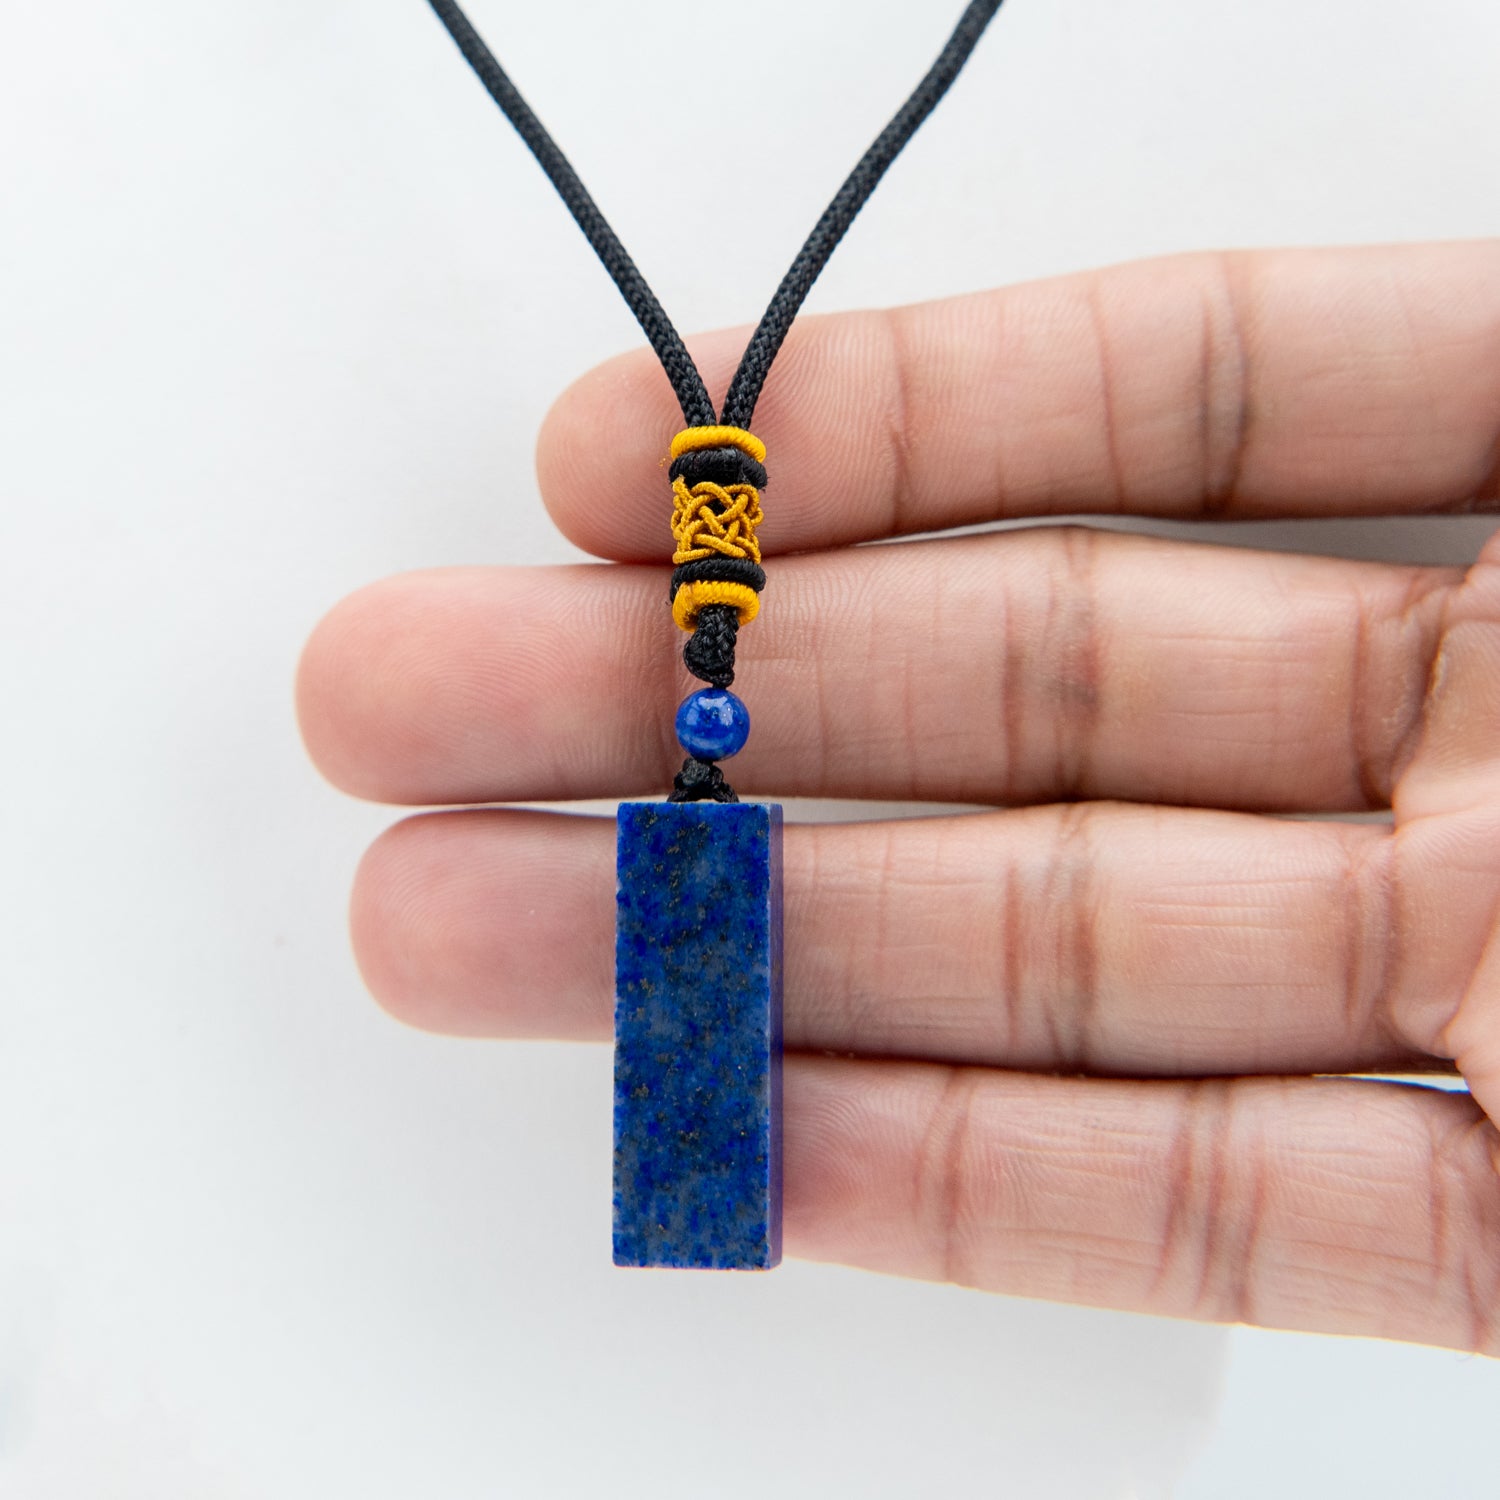 Genuine Lapis Lazuli Pendant with Black Cord Necklace